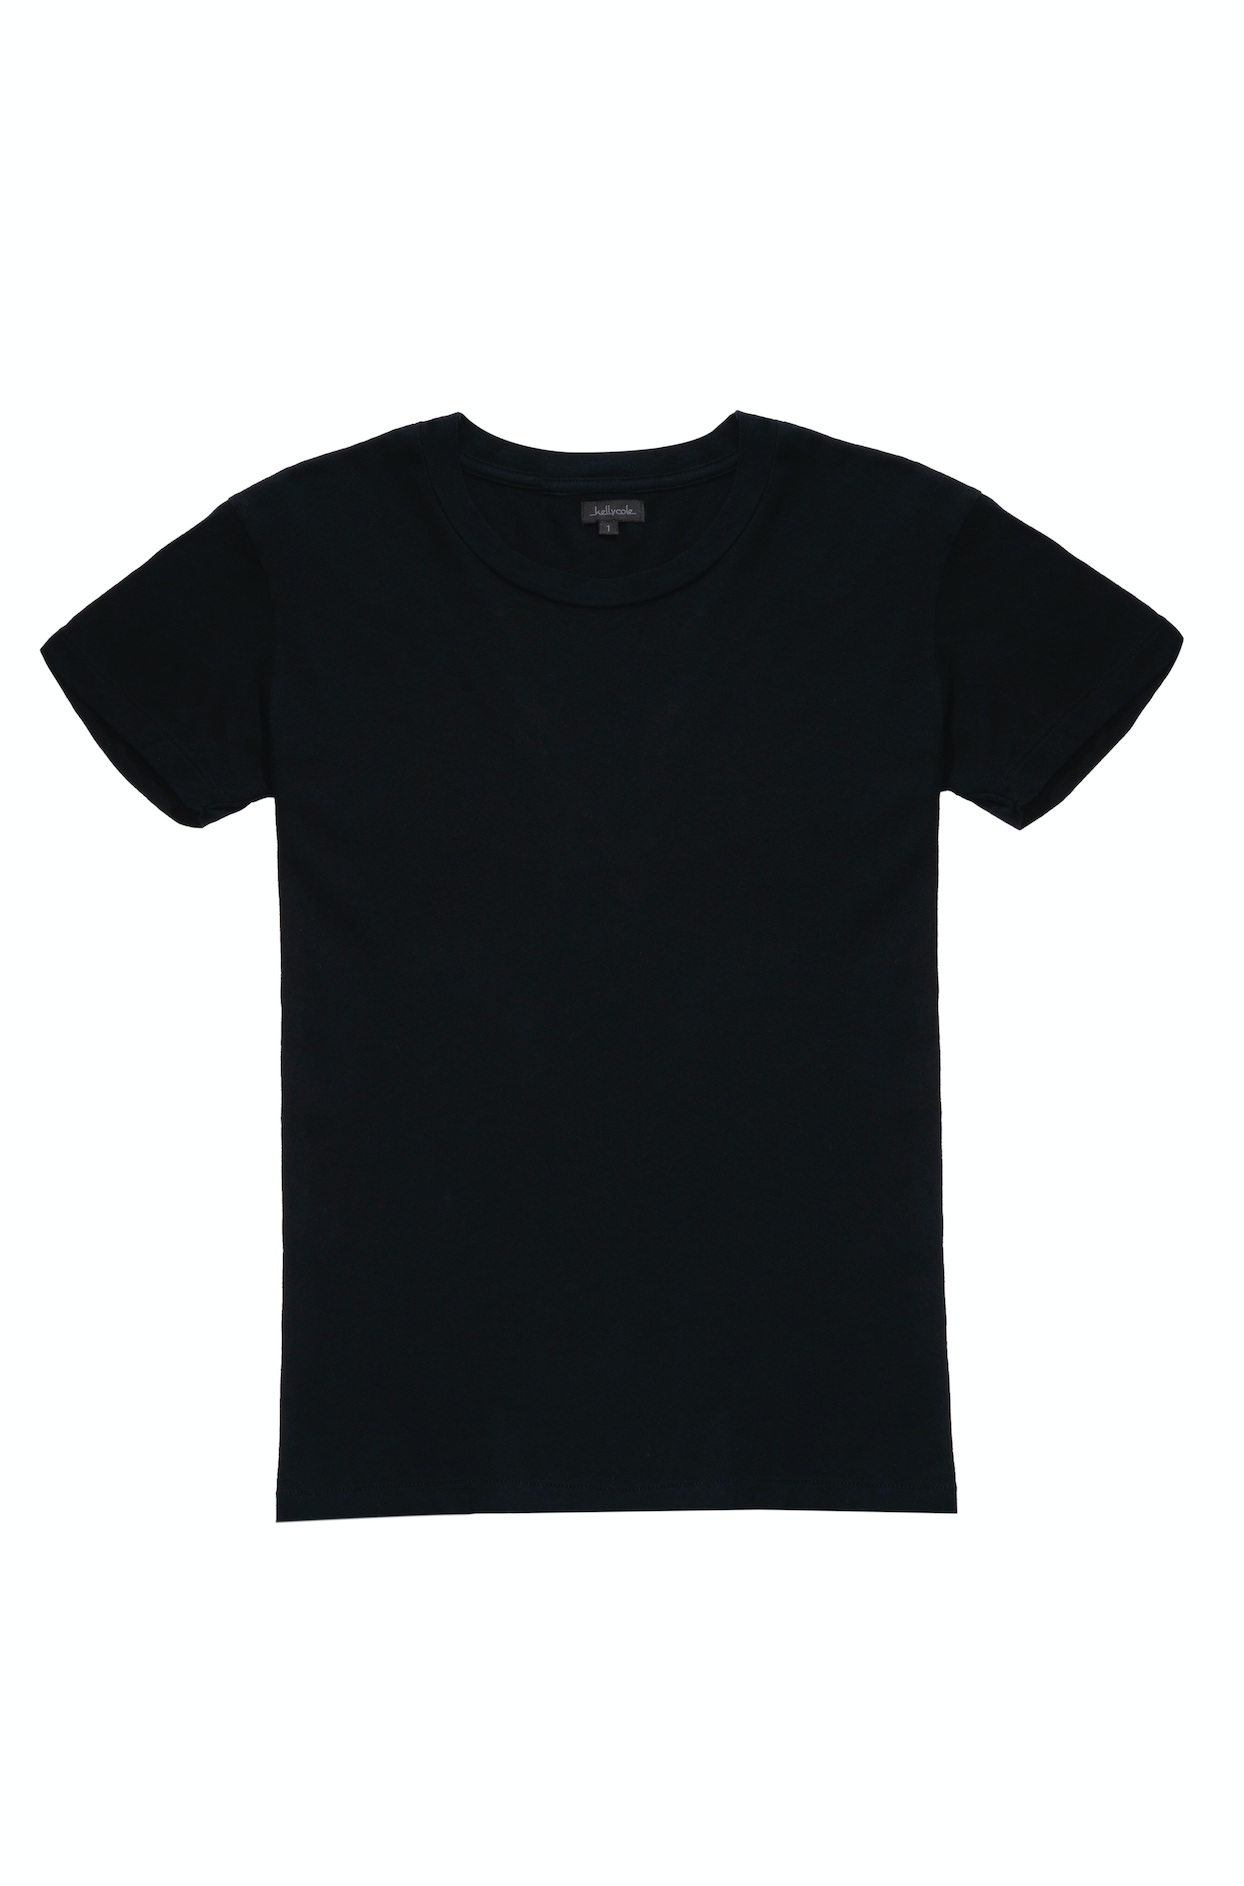 Kelly Cole Unisex Signature Blank T-Shirt - Jet Black